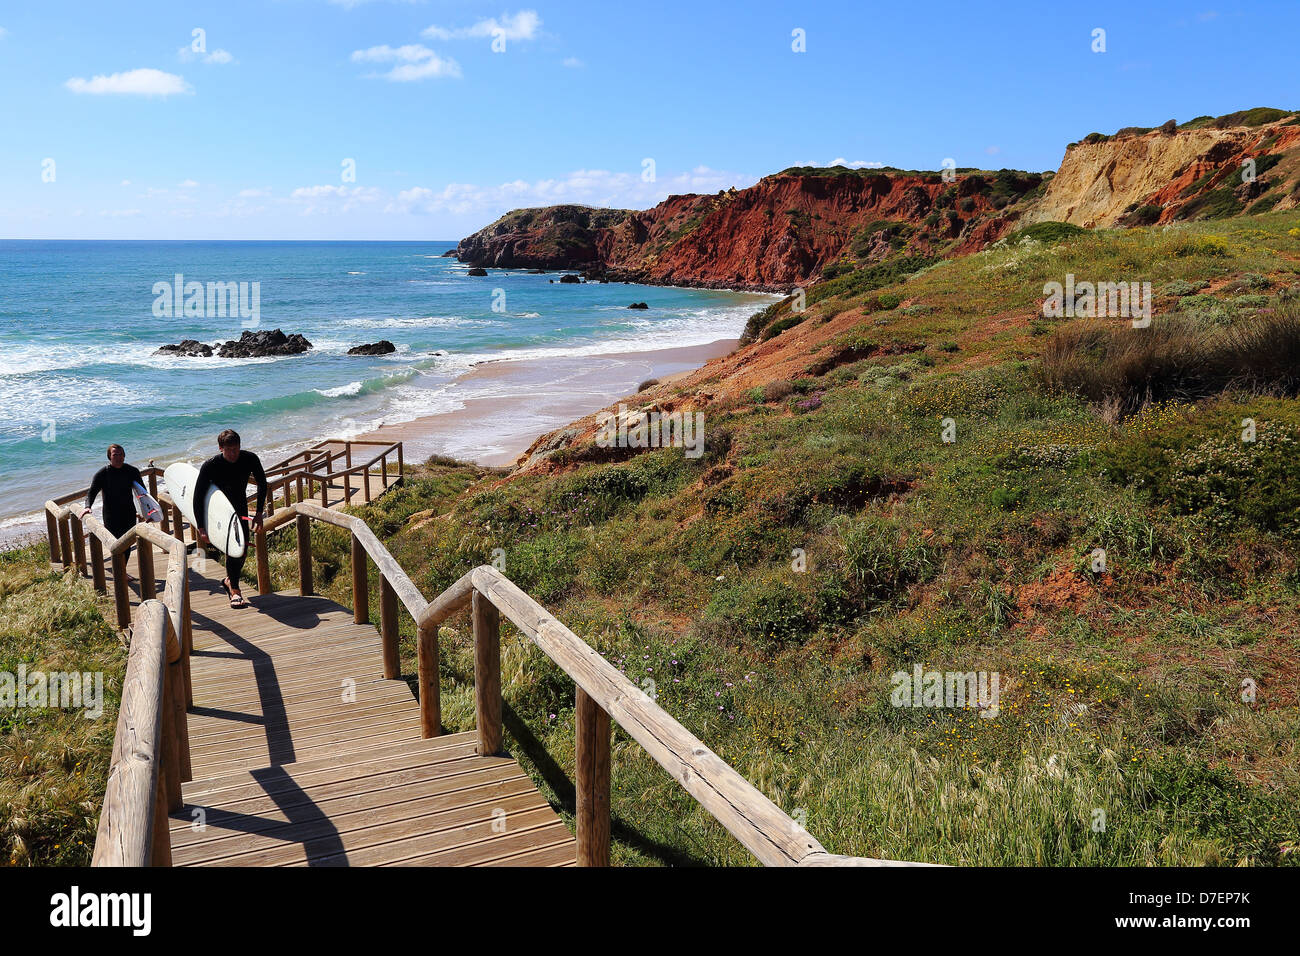 Amado beach, Costa Vicentina, Portugal Stock Photo